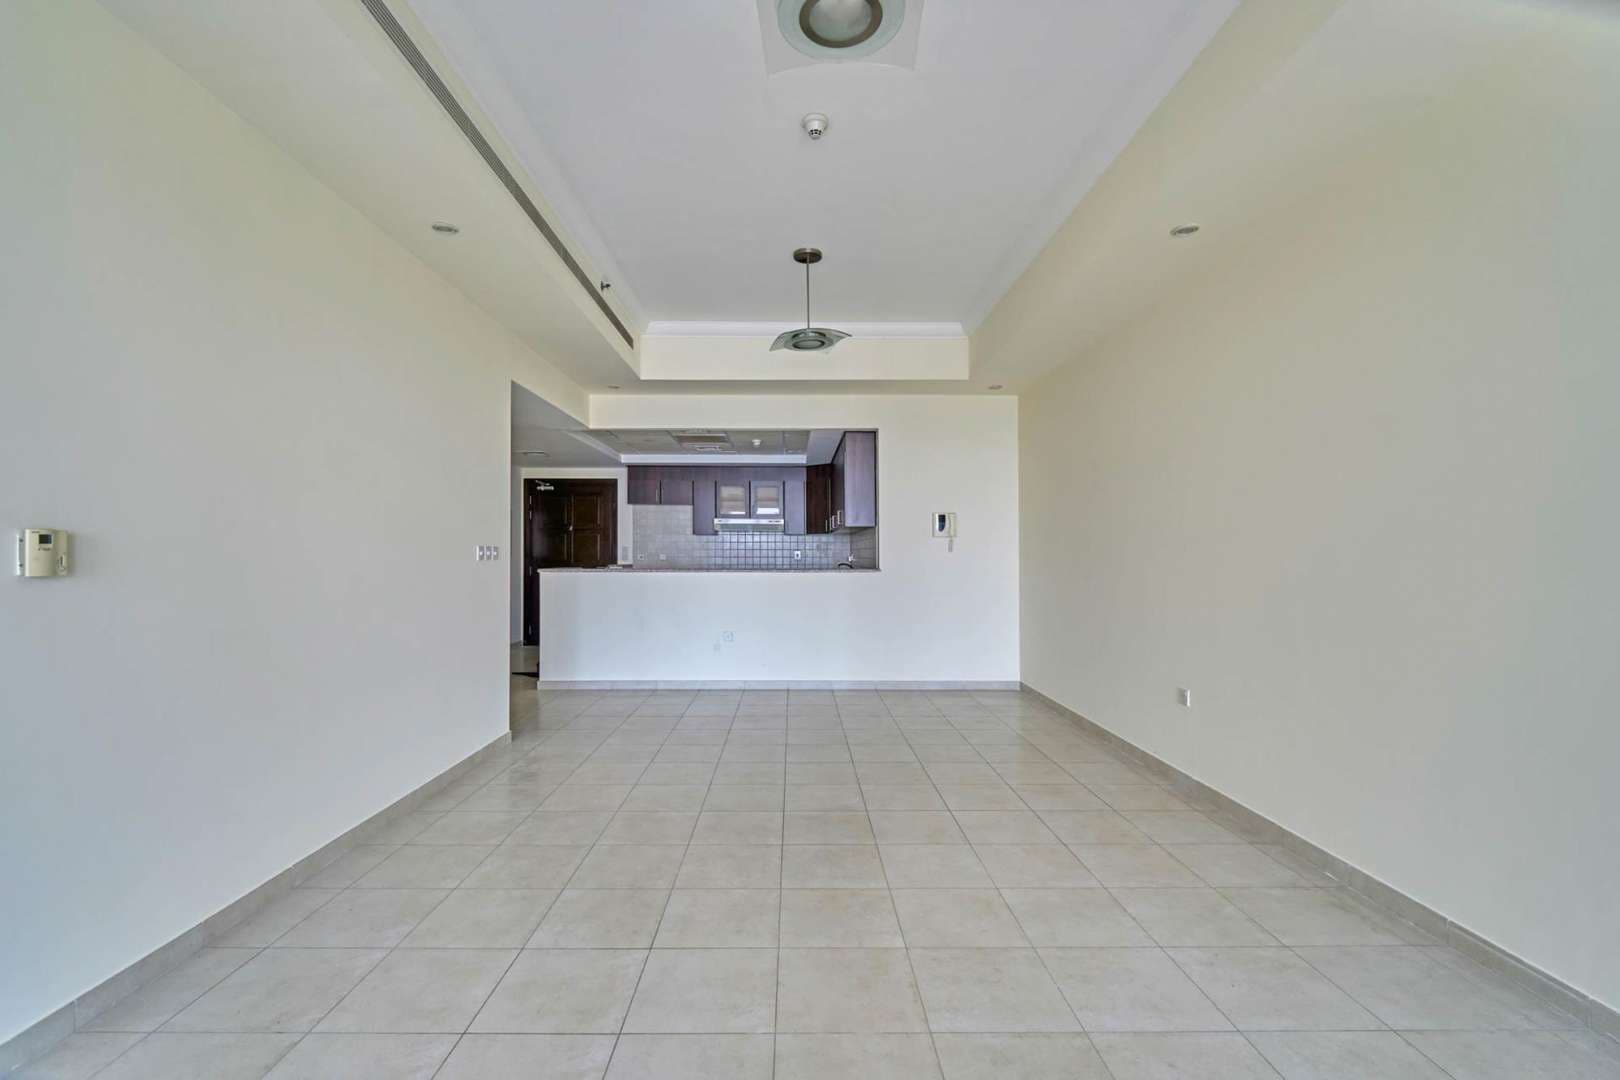 2 Bedroom Apartment For Rent Churchill Executive Tower Lp05714 9d6976cfe86c880.jpg